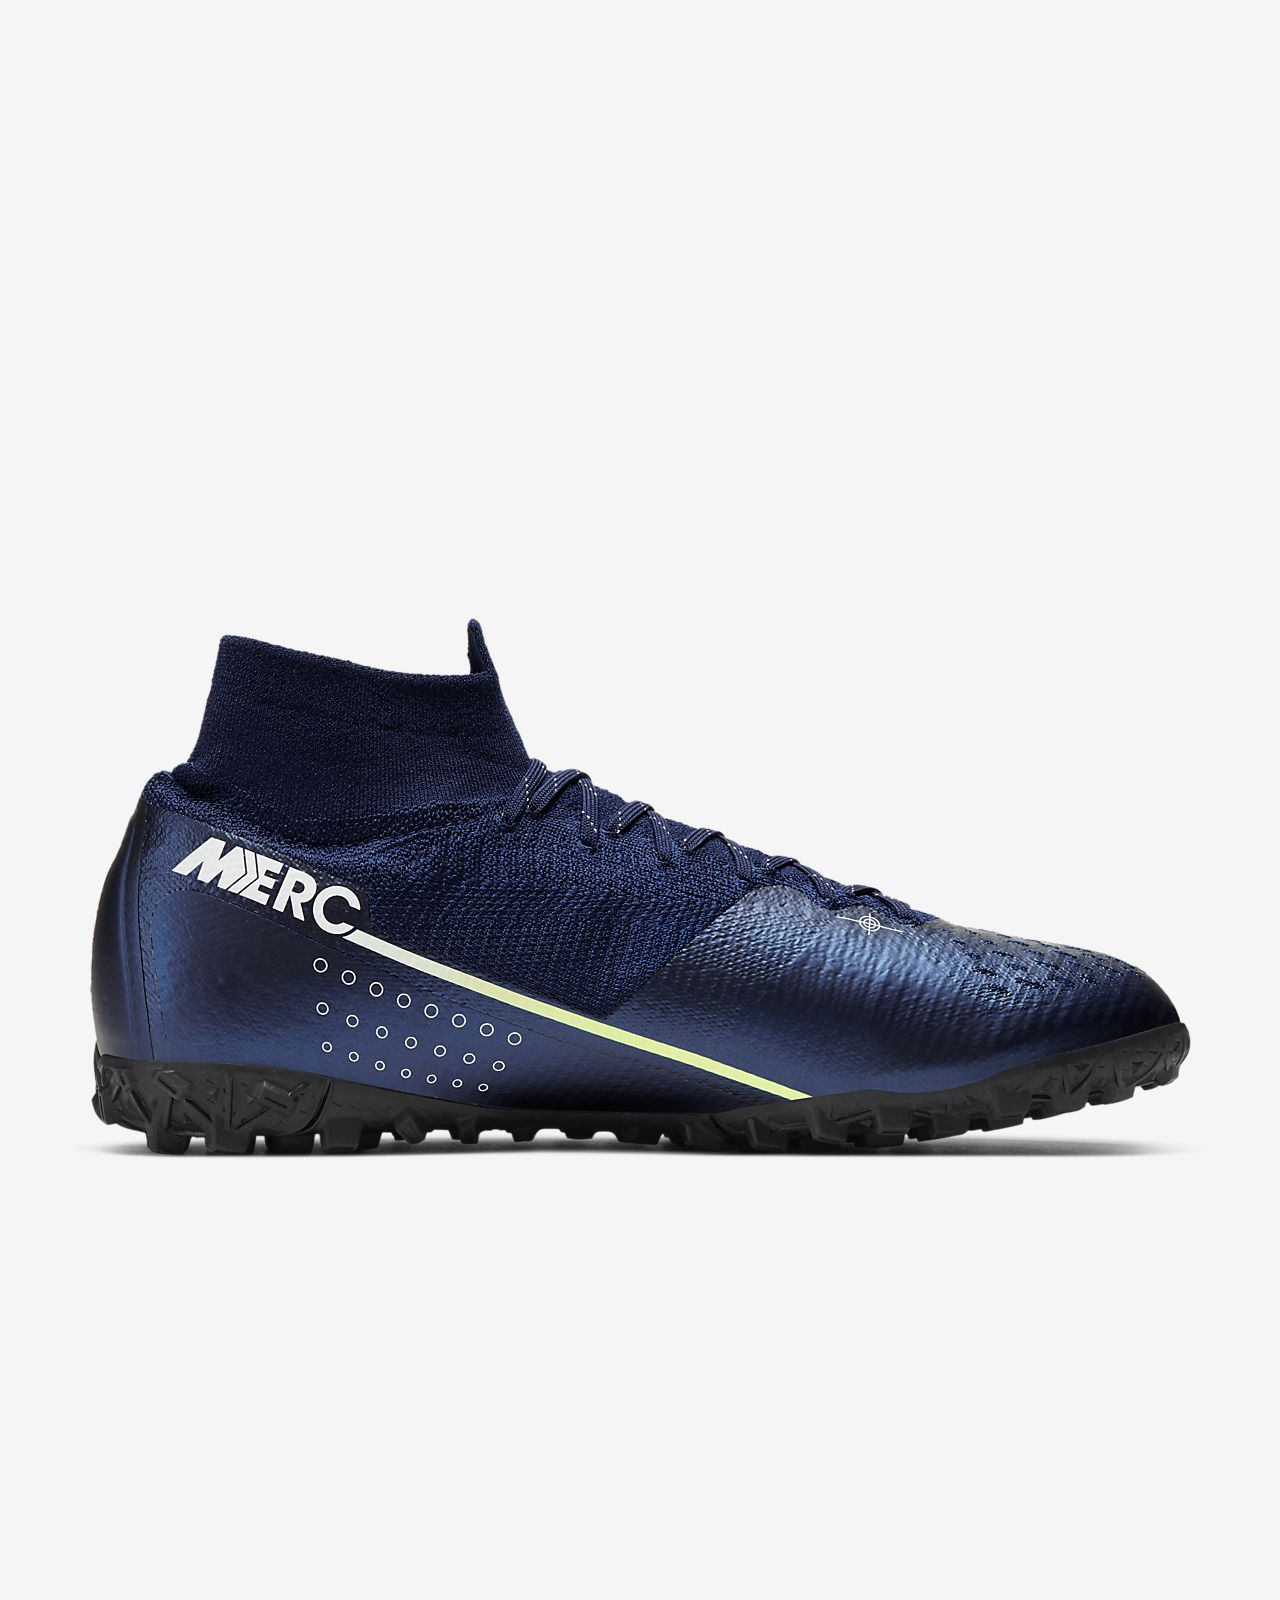 Nike Mercurial Superfly VII Elite FG Football Boots £ 60.00